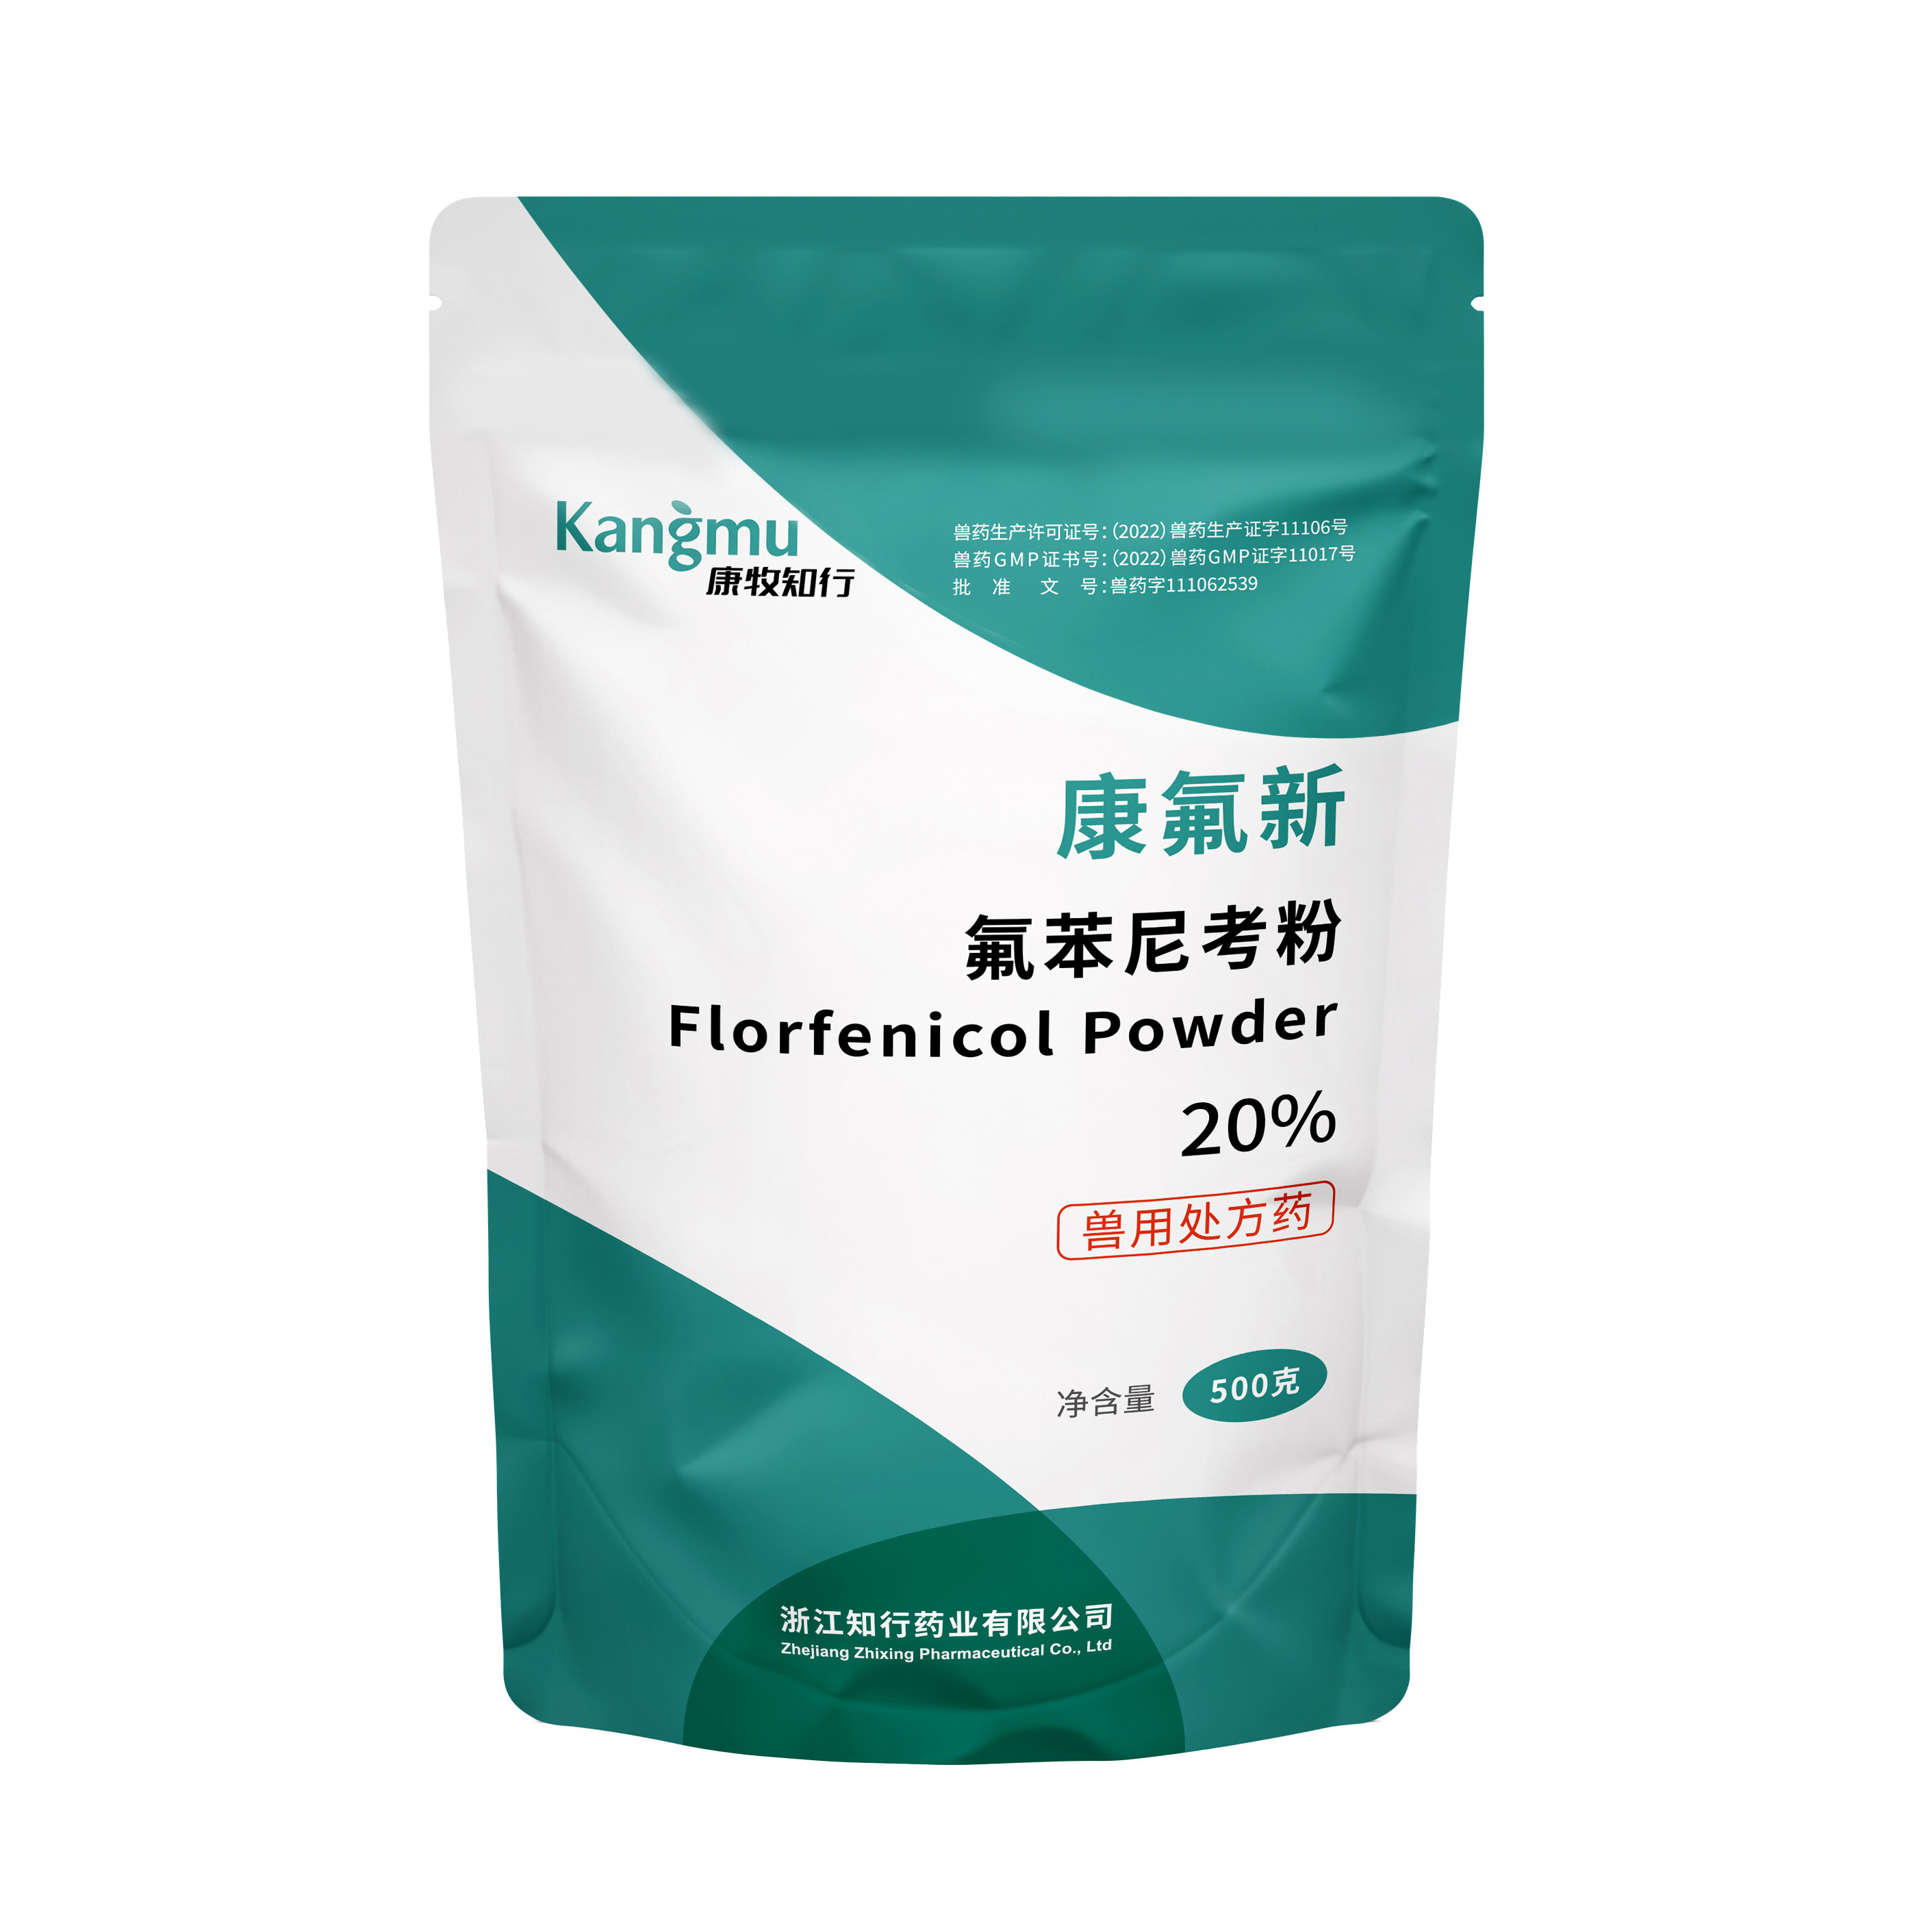 20% florfenicol powder